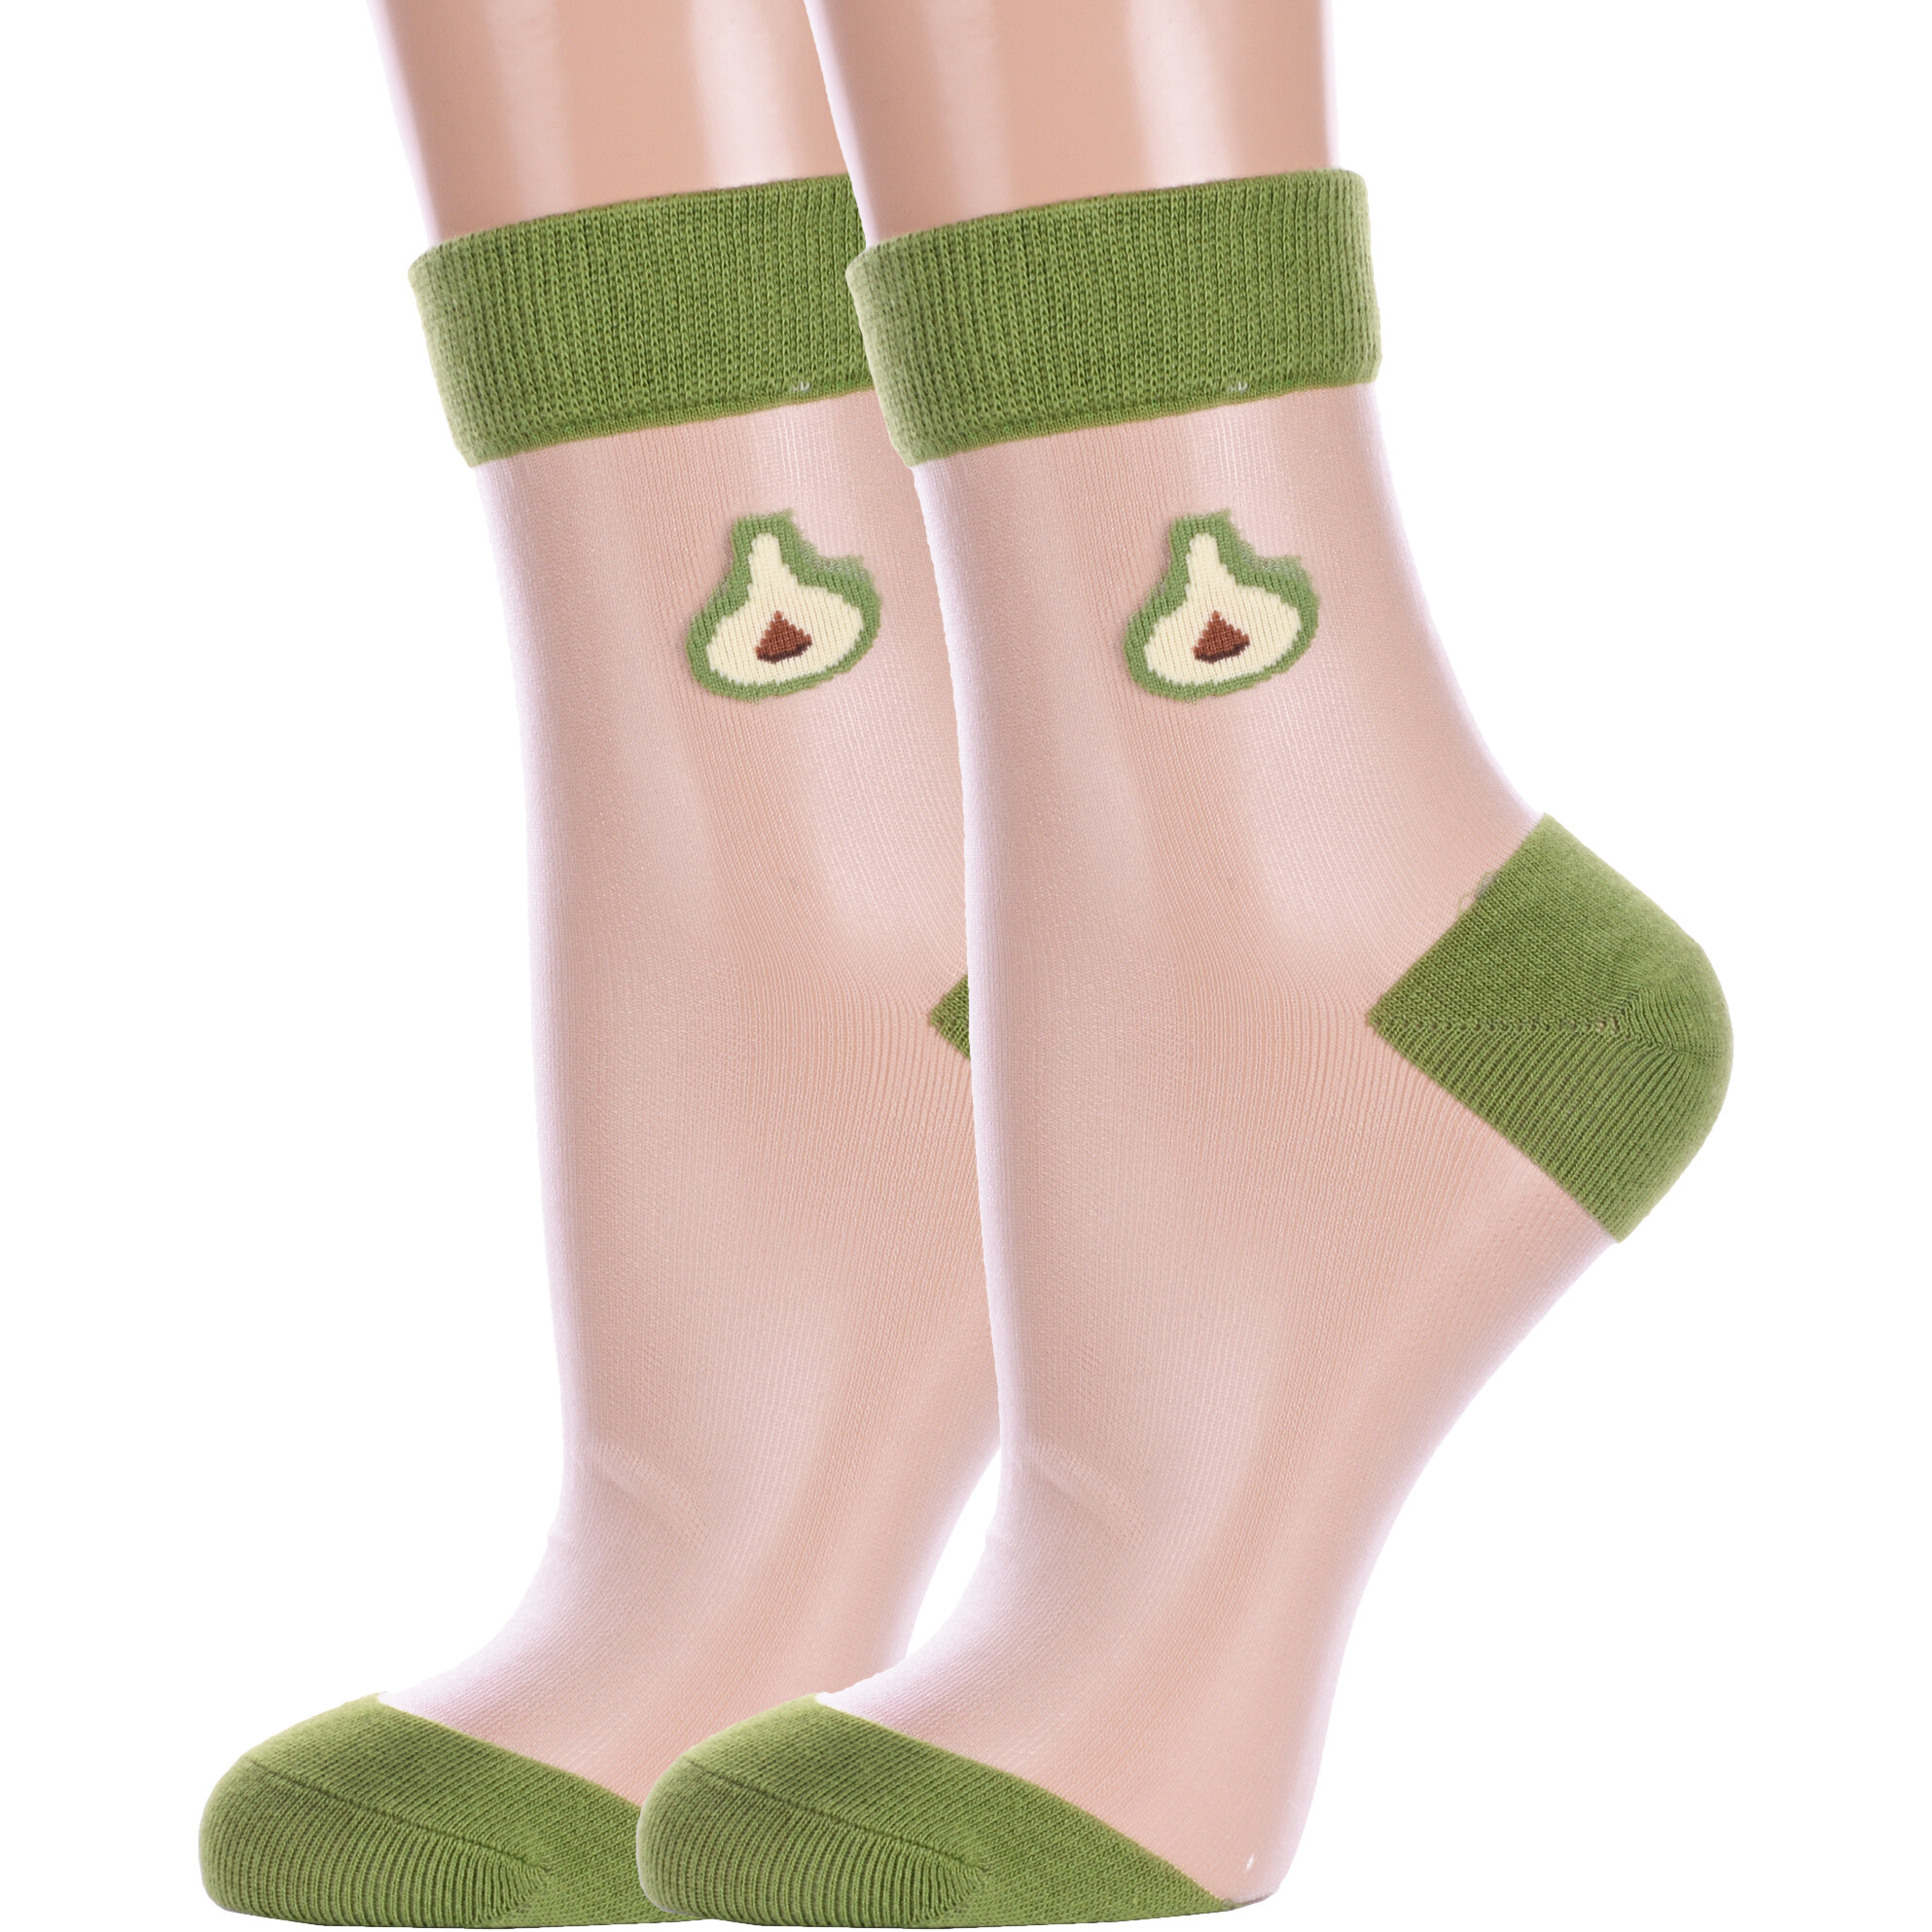 Комплект носков женских Hobby Line 2-нжст зеленых 36-40, 2 пары